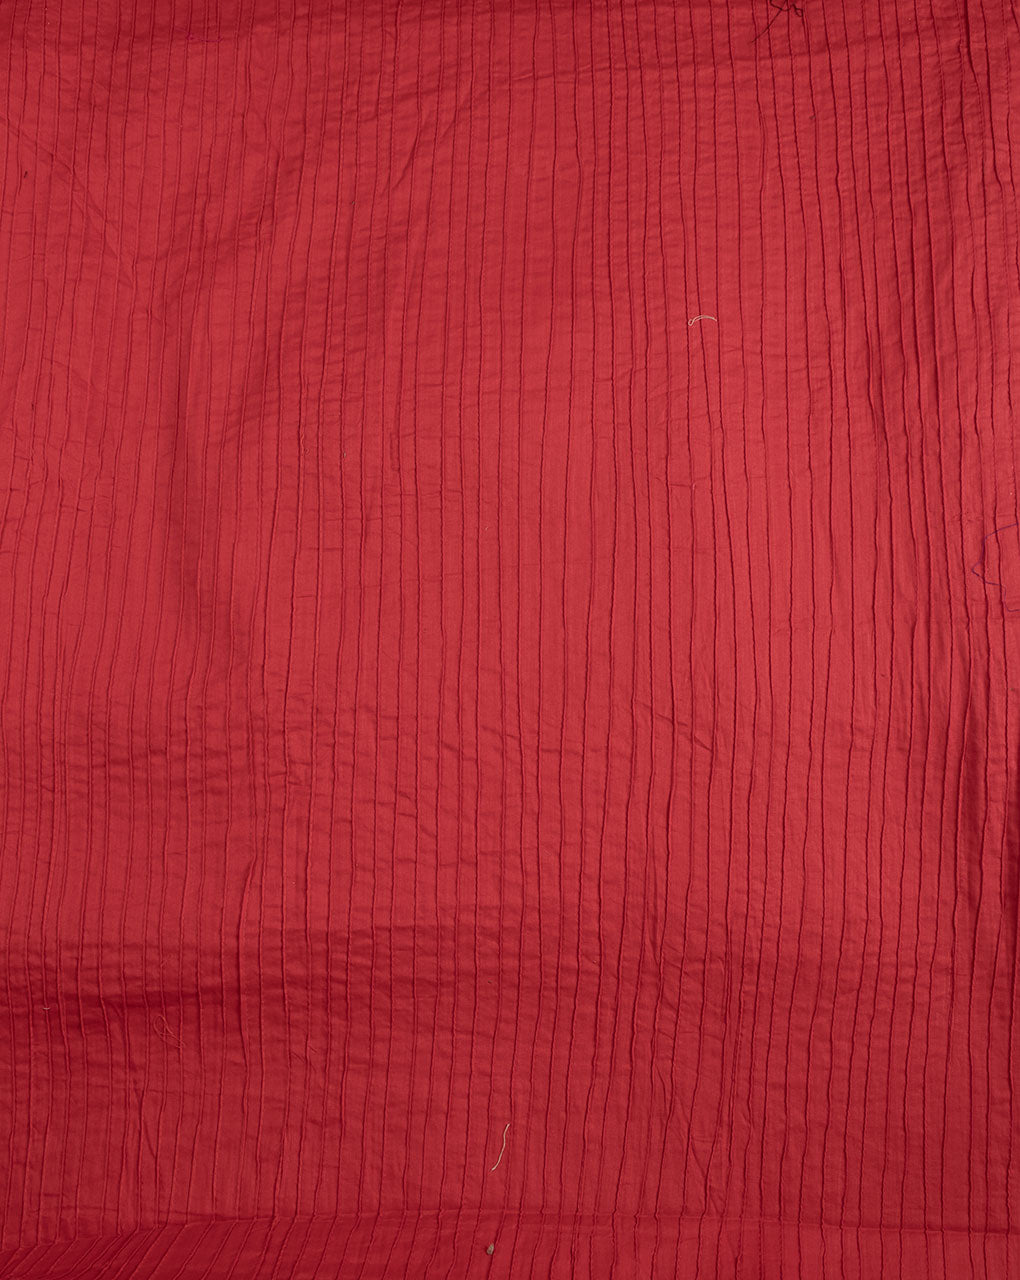 Red Pin-Tucks Cotton Fabric ( Width 36 Inch ) - Fabriclore.com